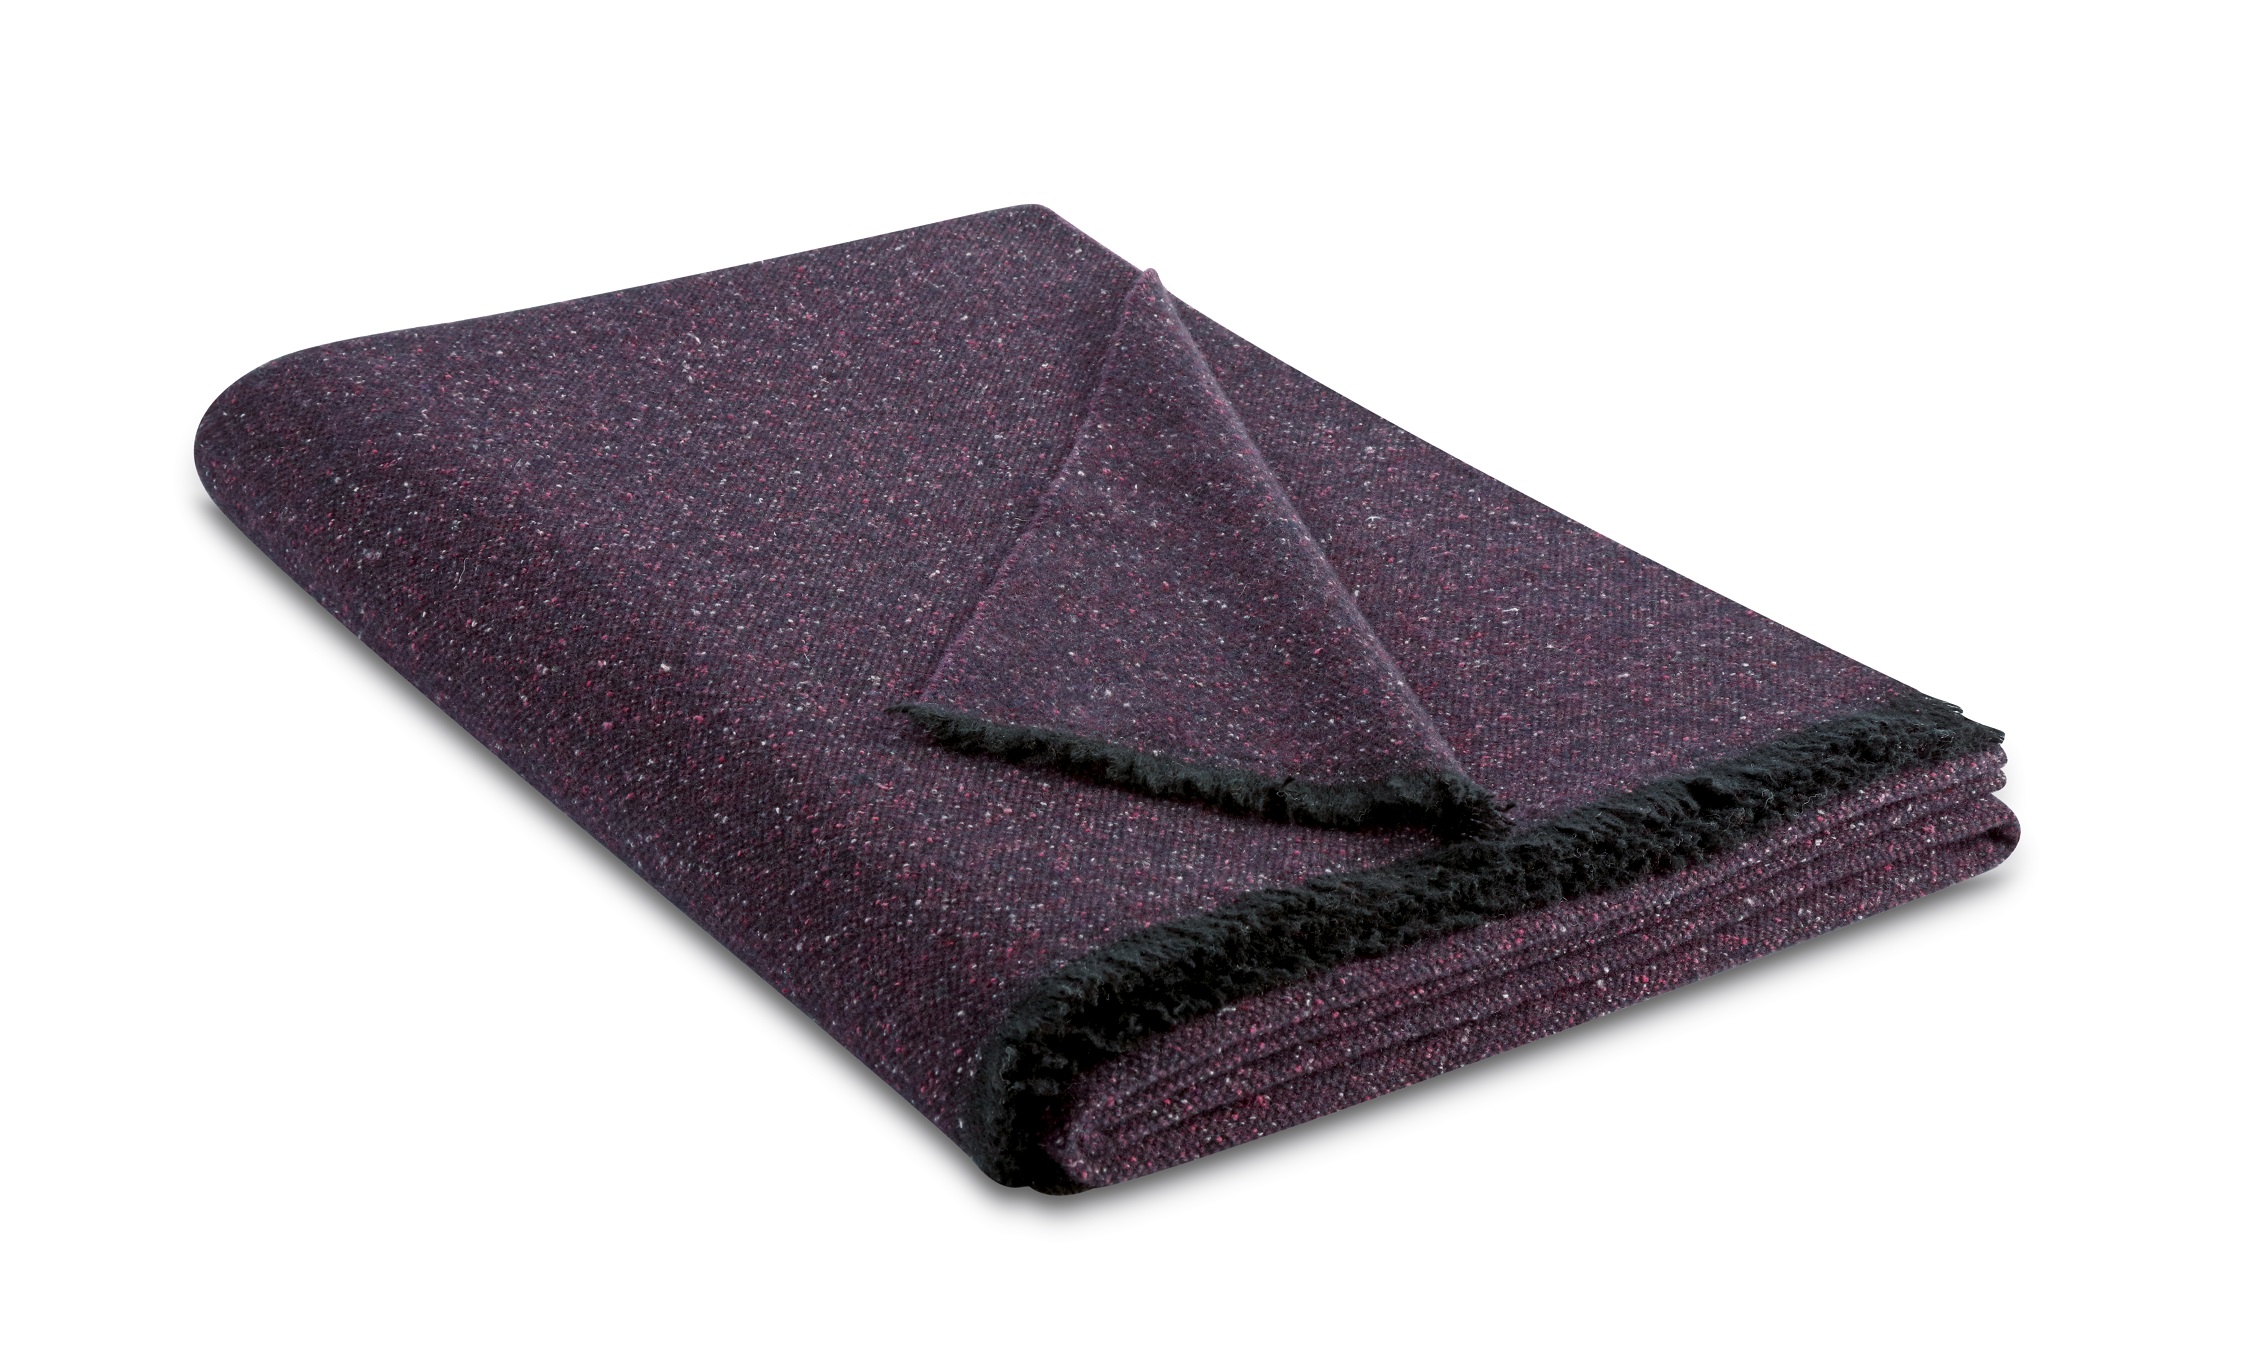 Biederlack Plaid Wolldecke Betten aubergine Decke Cashmere | Wolle 130x170 purple Shop Seide Hofmann